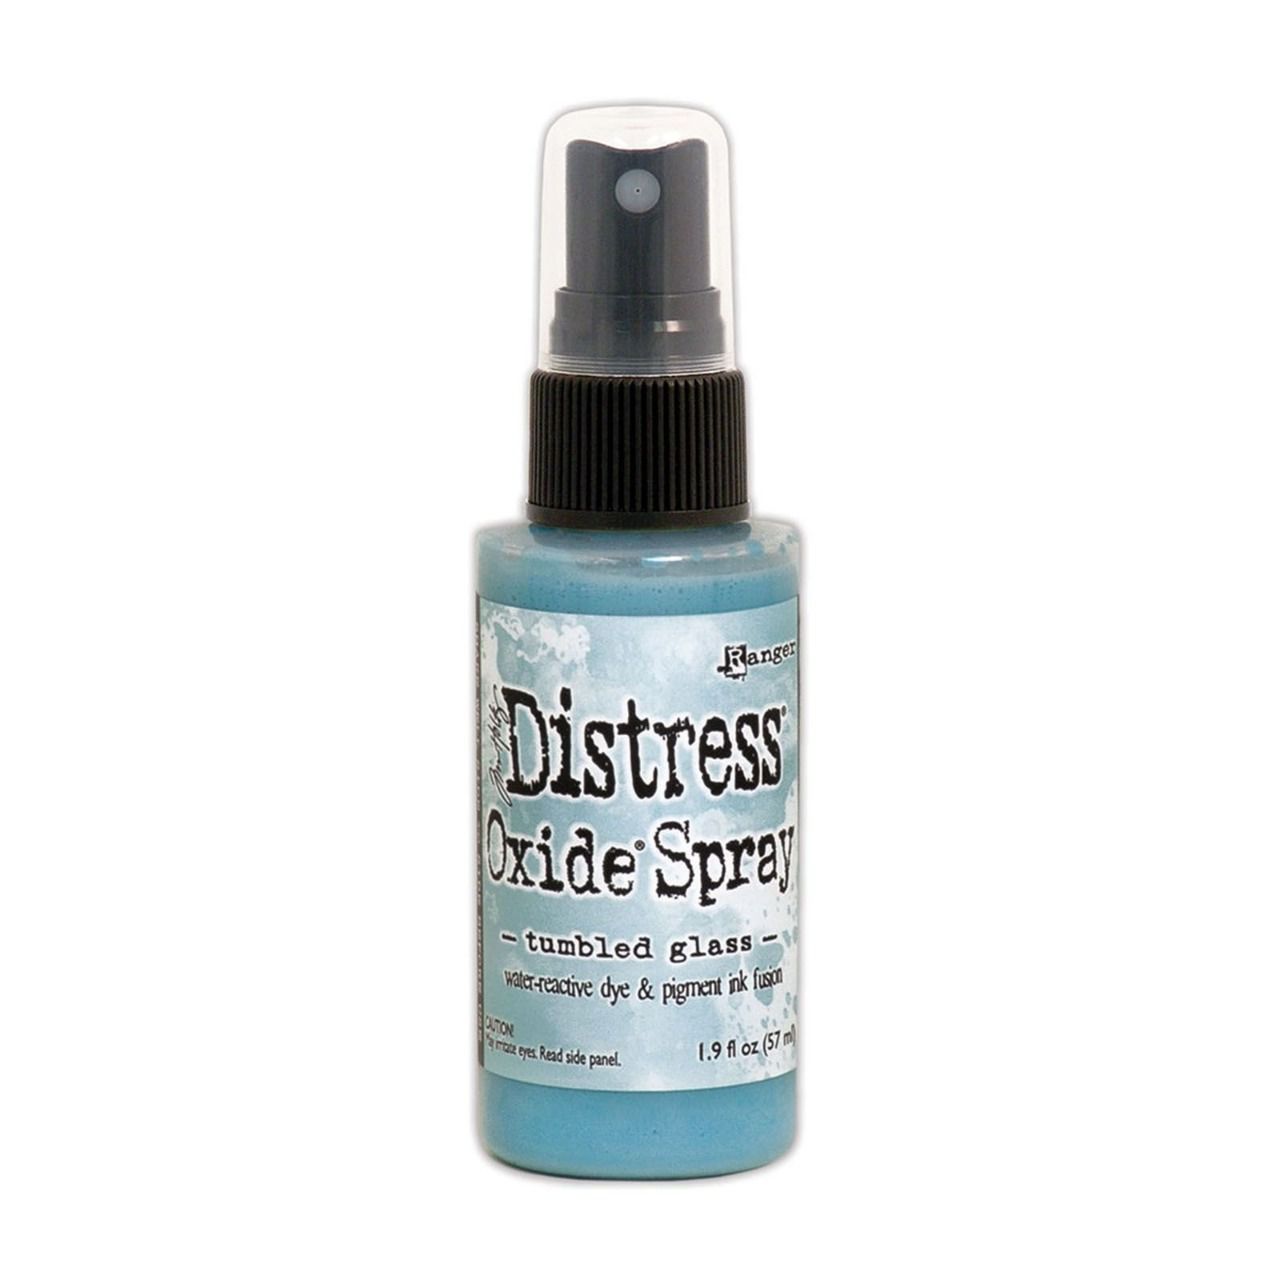 Distress spray oxide : Tumbled glass